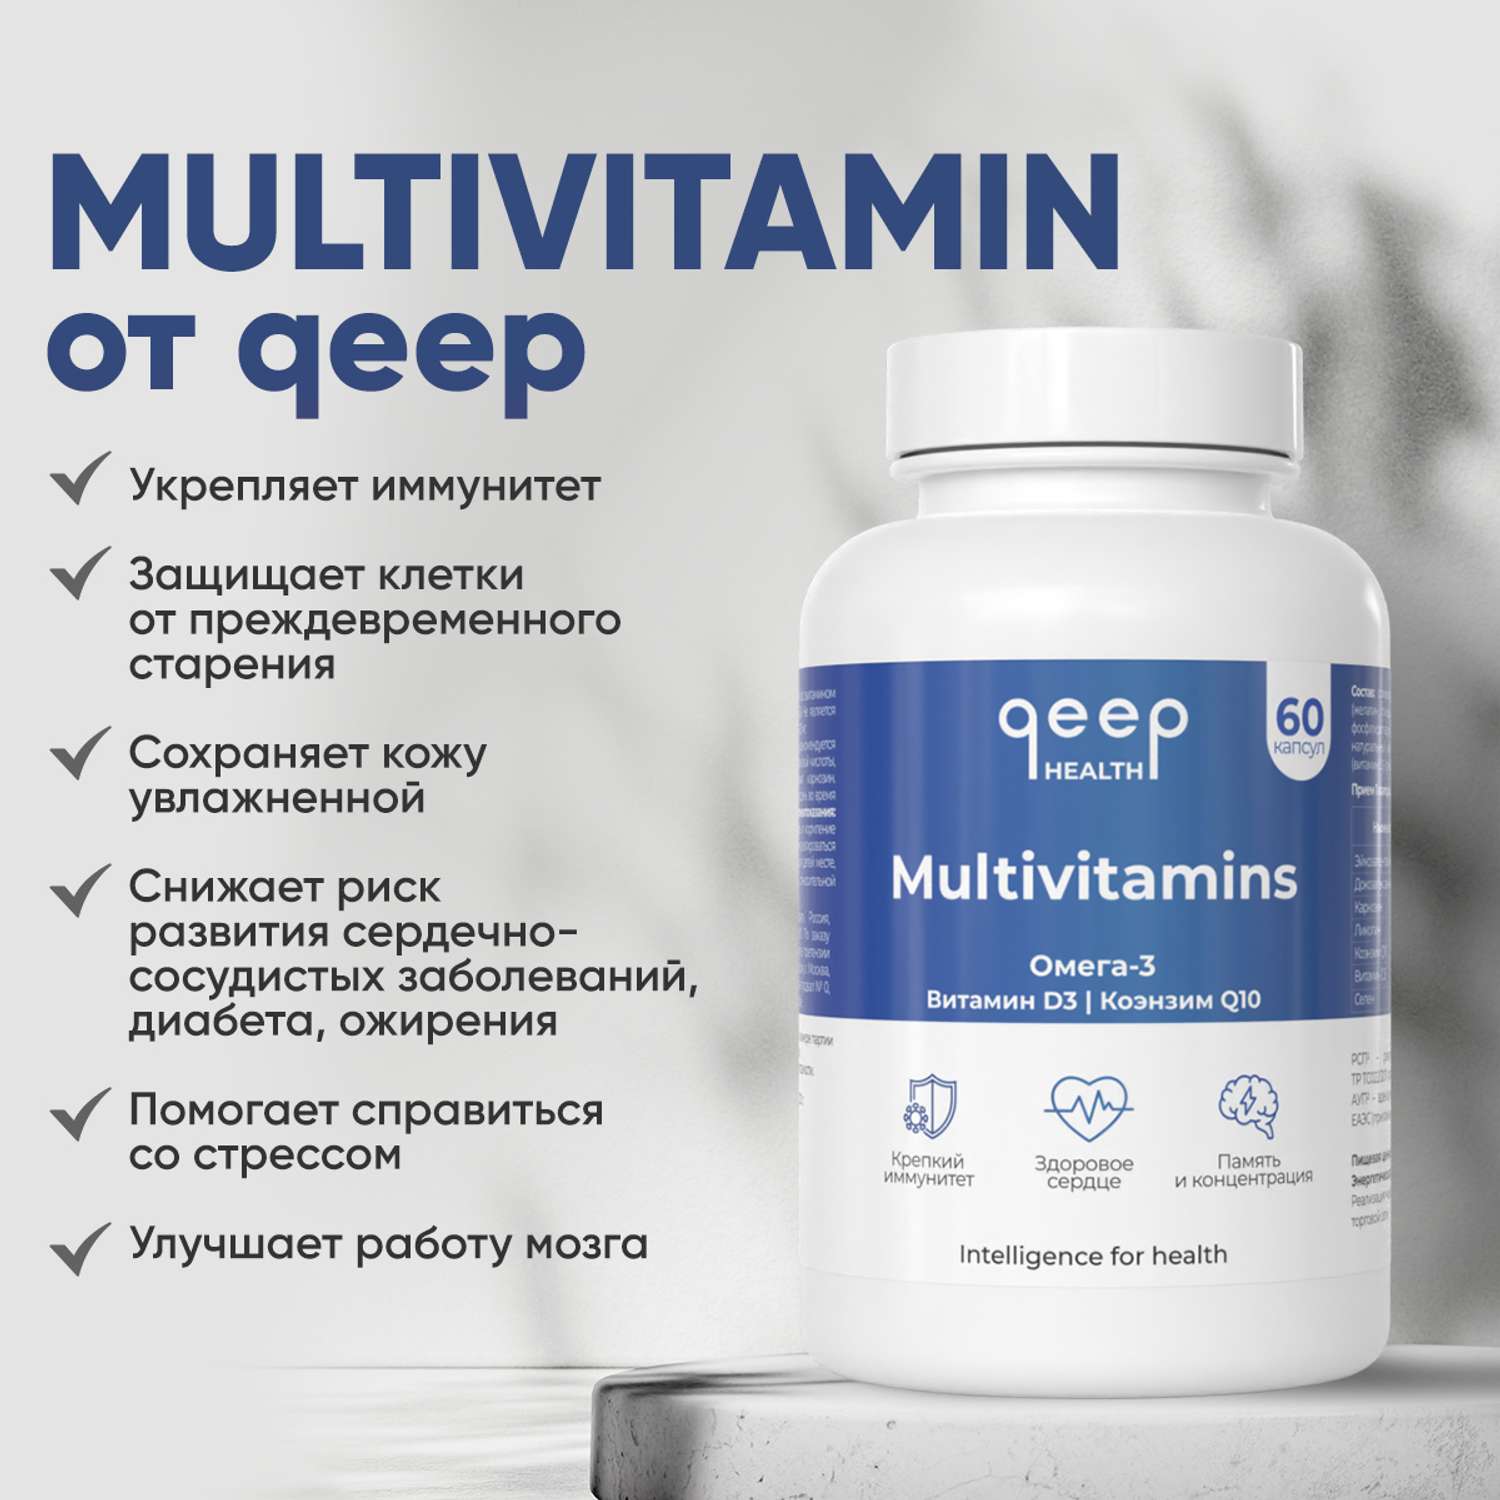 Мультивитамины qeep Омега 3 Д селен q10 multi vitamin витамины - фото 6